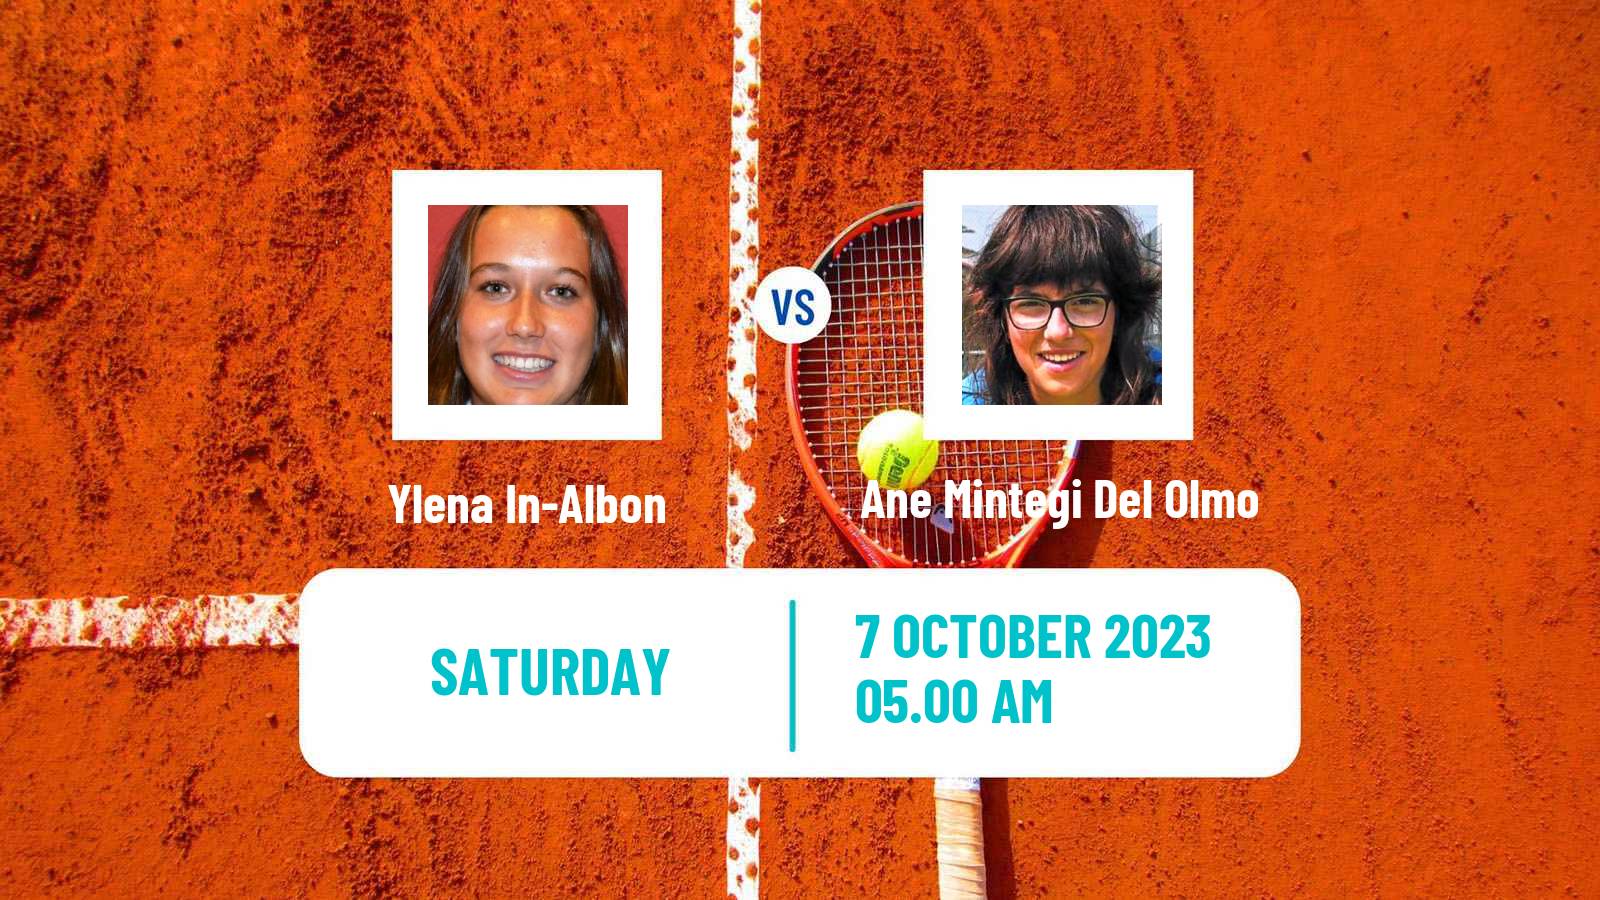 Tennis ITF W25 Santa Margherita Di Pula 8 Women Ylena In-Albon - Ane Mintegi Del Olmo